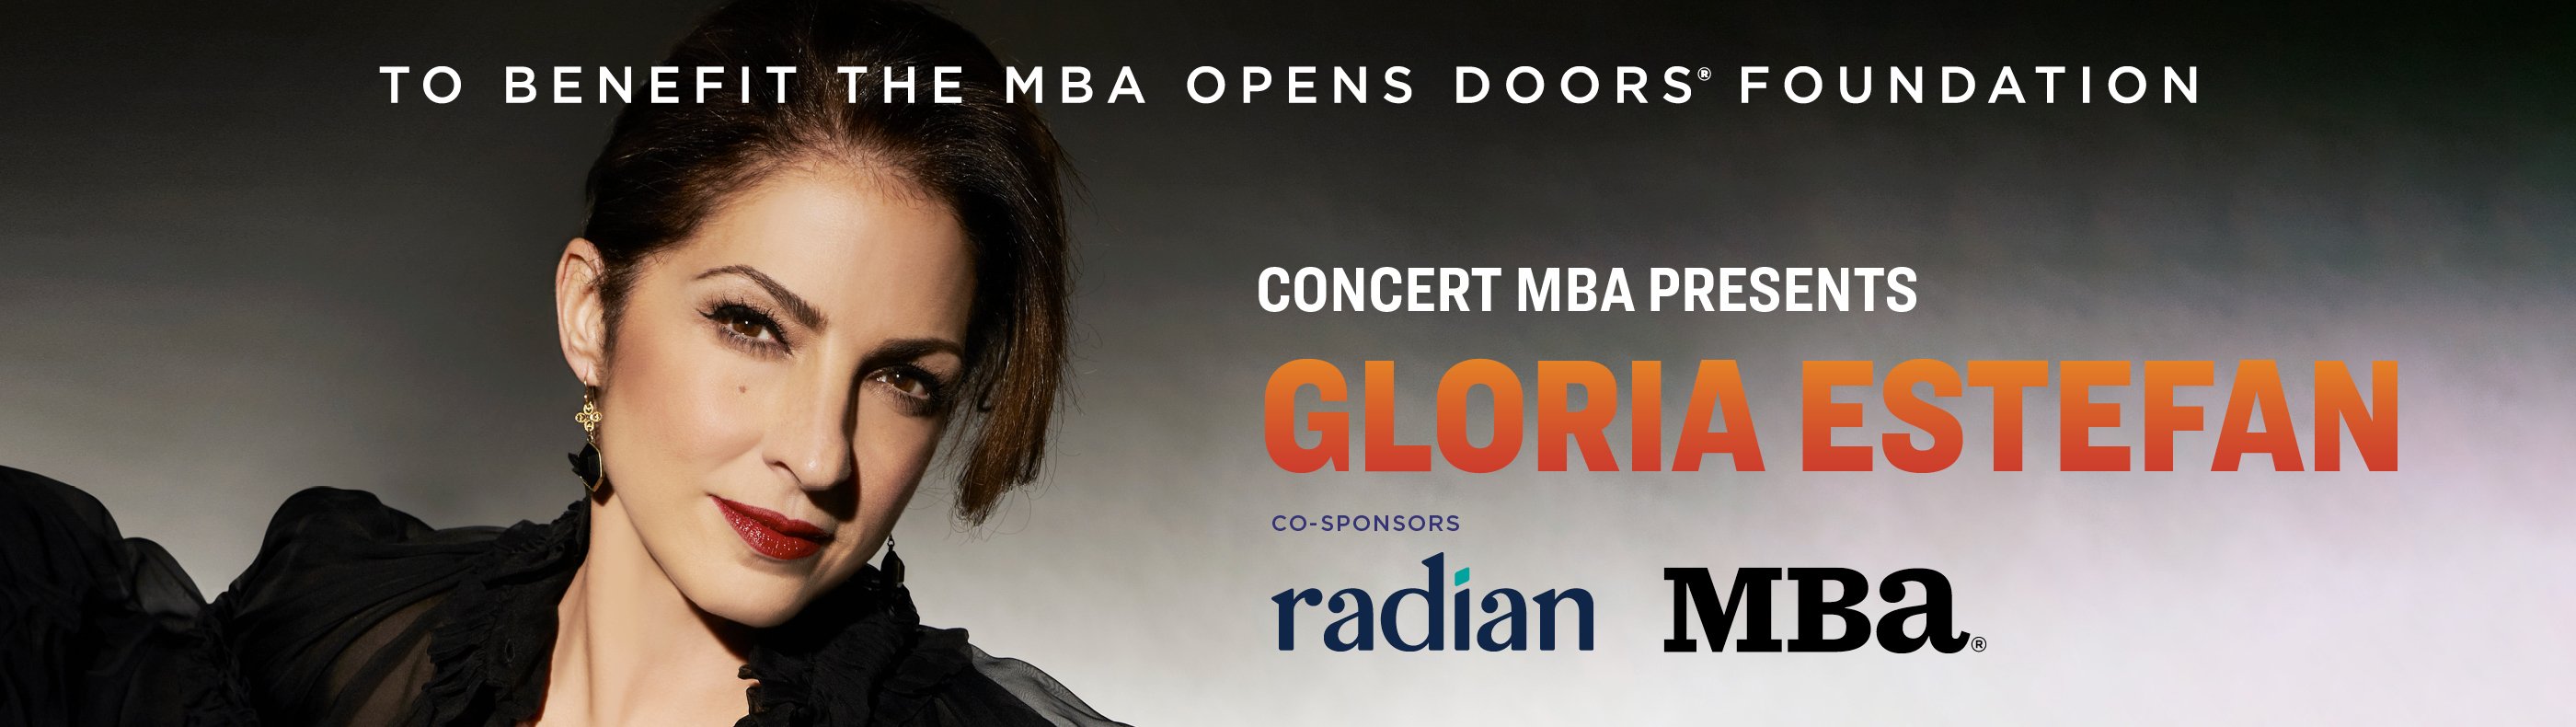 Concert MBA Presents Gloria Estefan